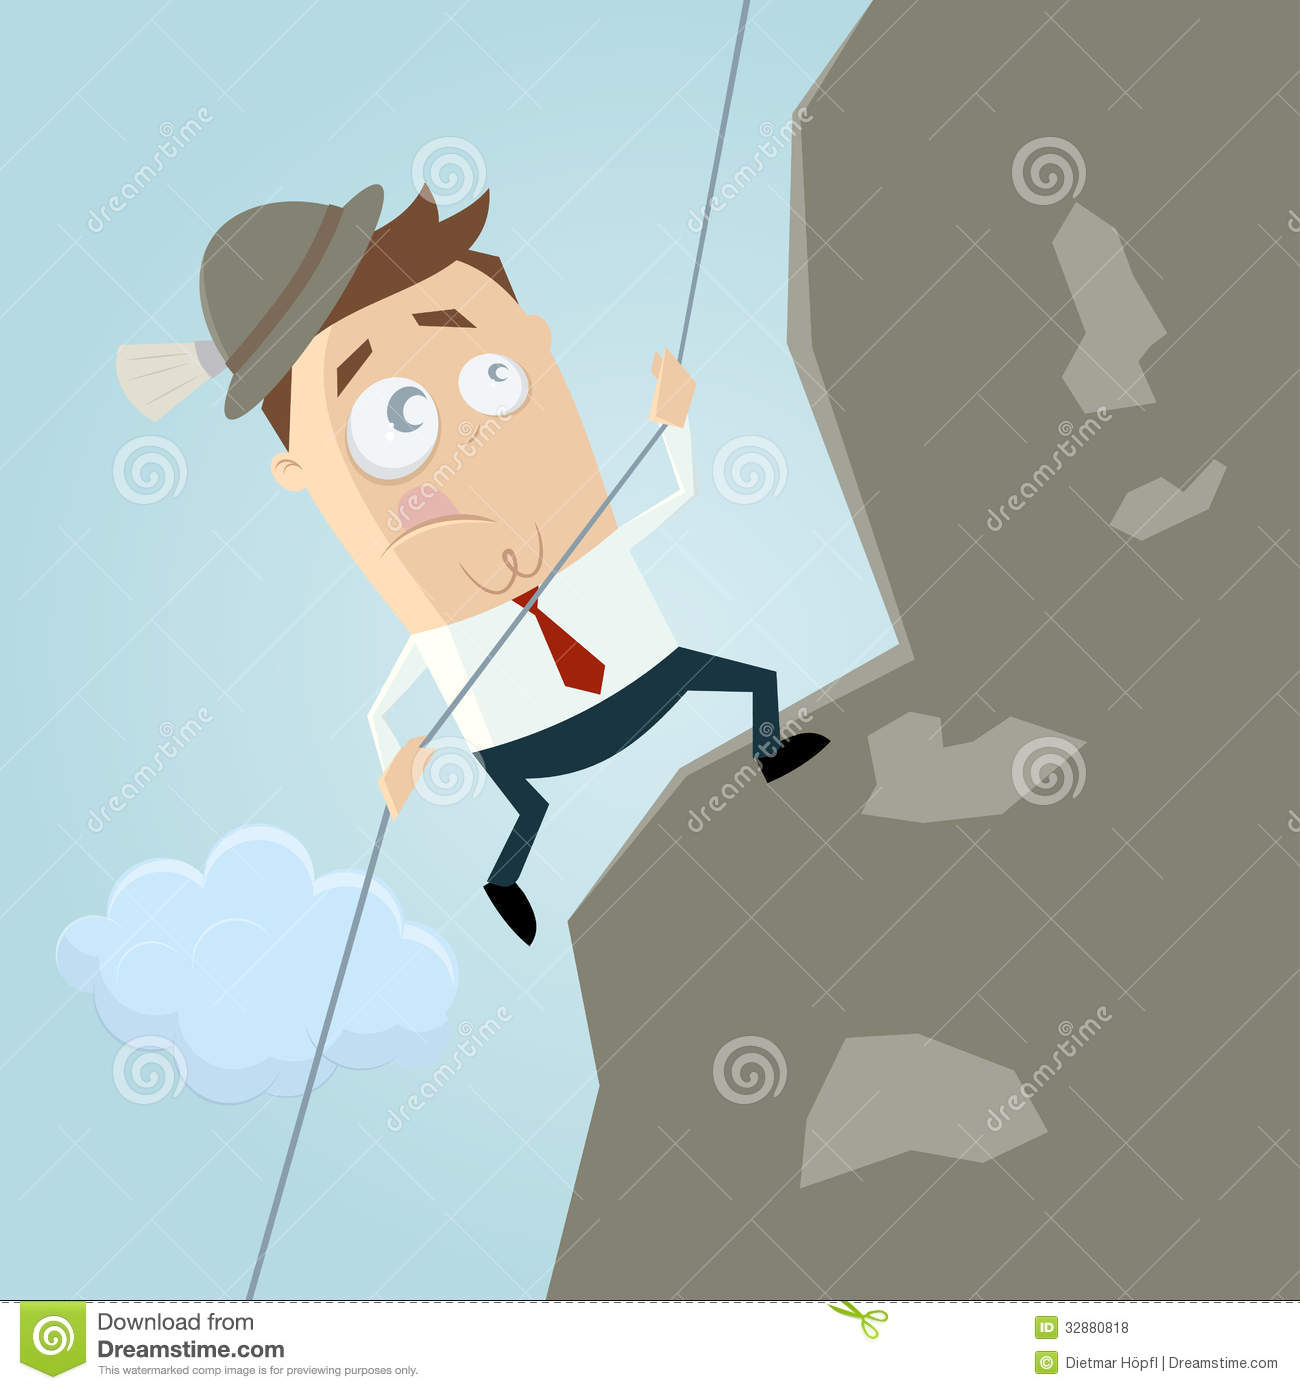 Cartoon Man Climbing A Mountain Royalty Free Stock Photos   Image